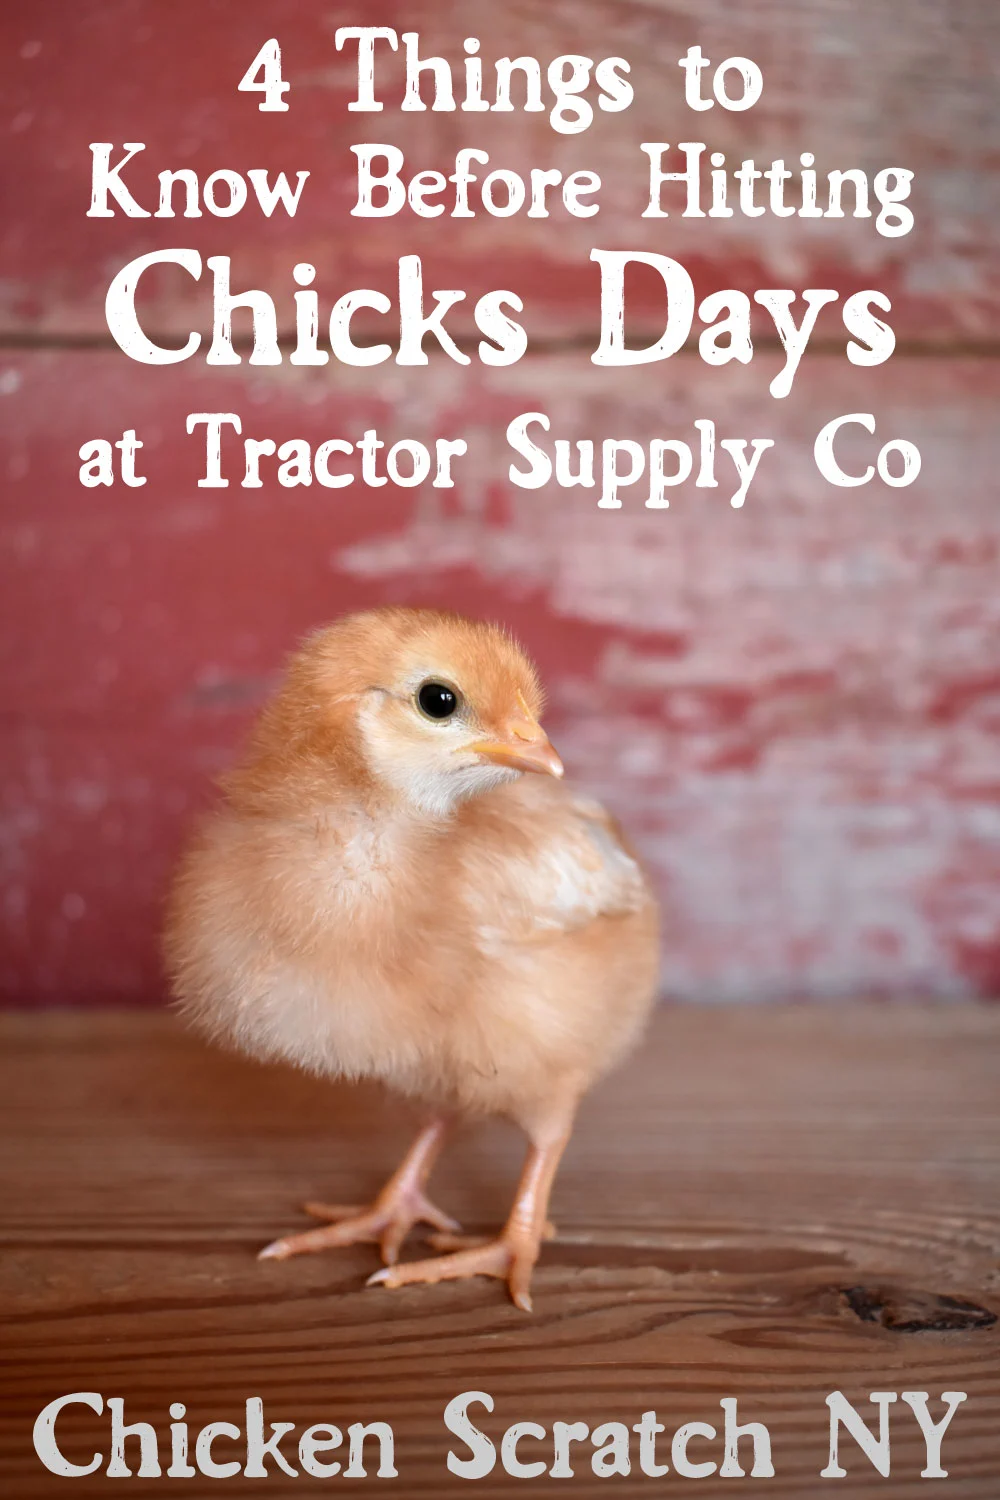 Tractor Supply Chickens & Ducks Breed Information